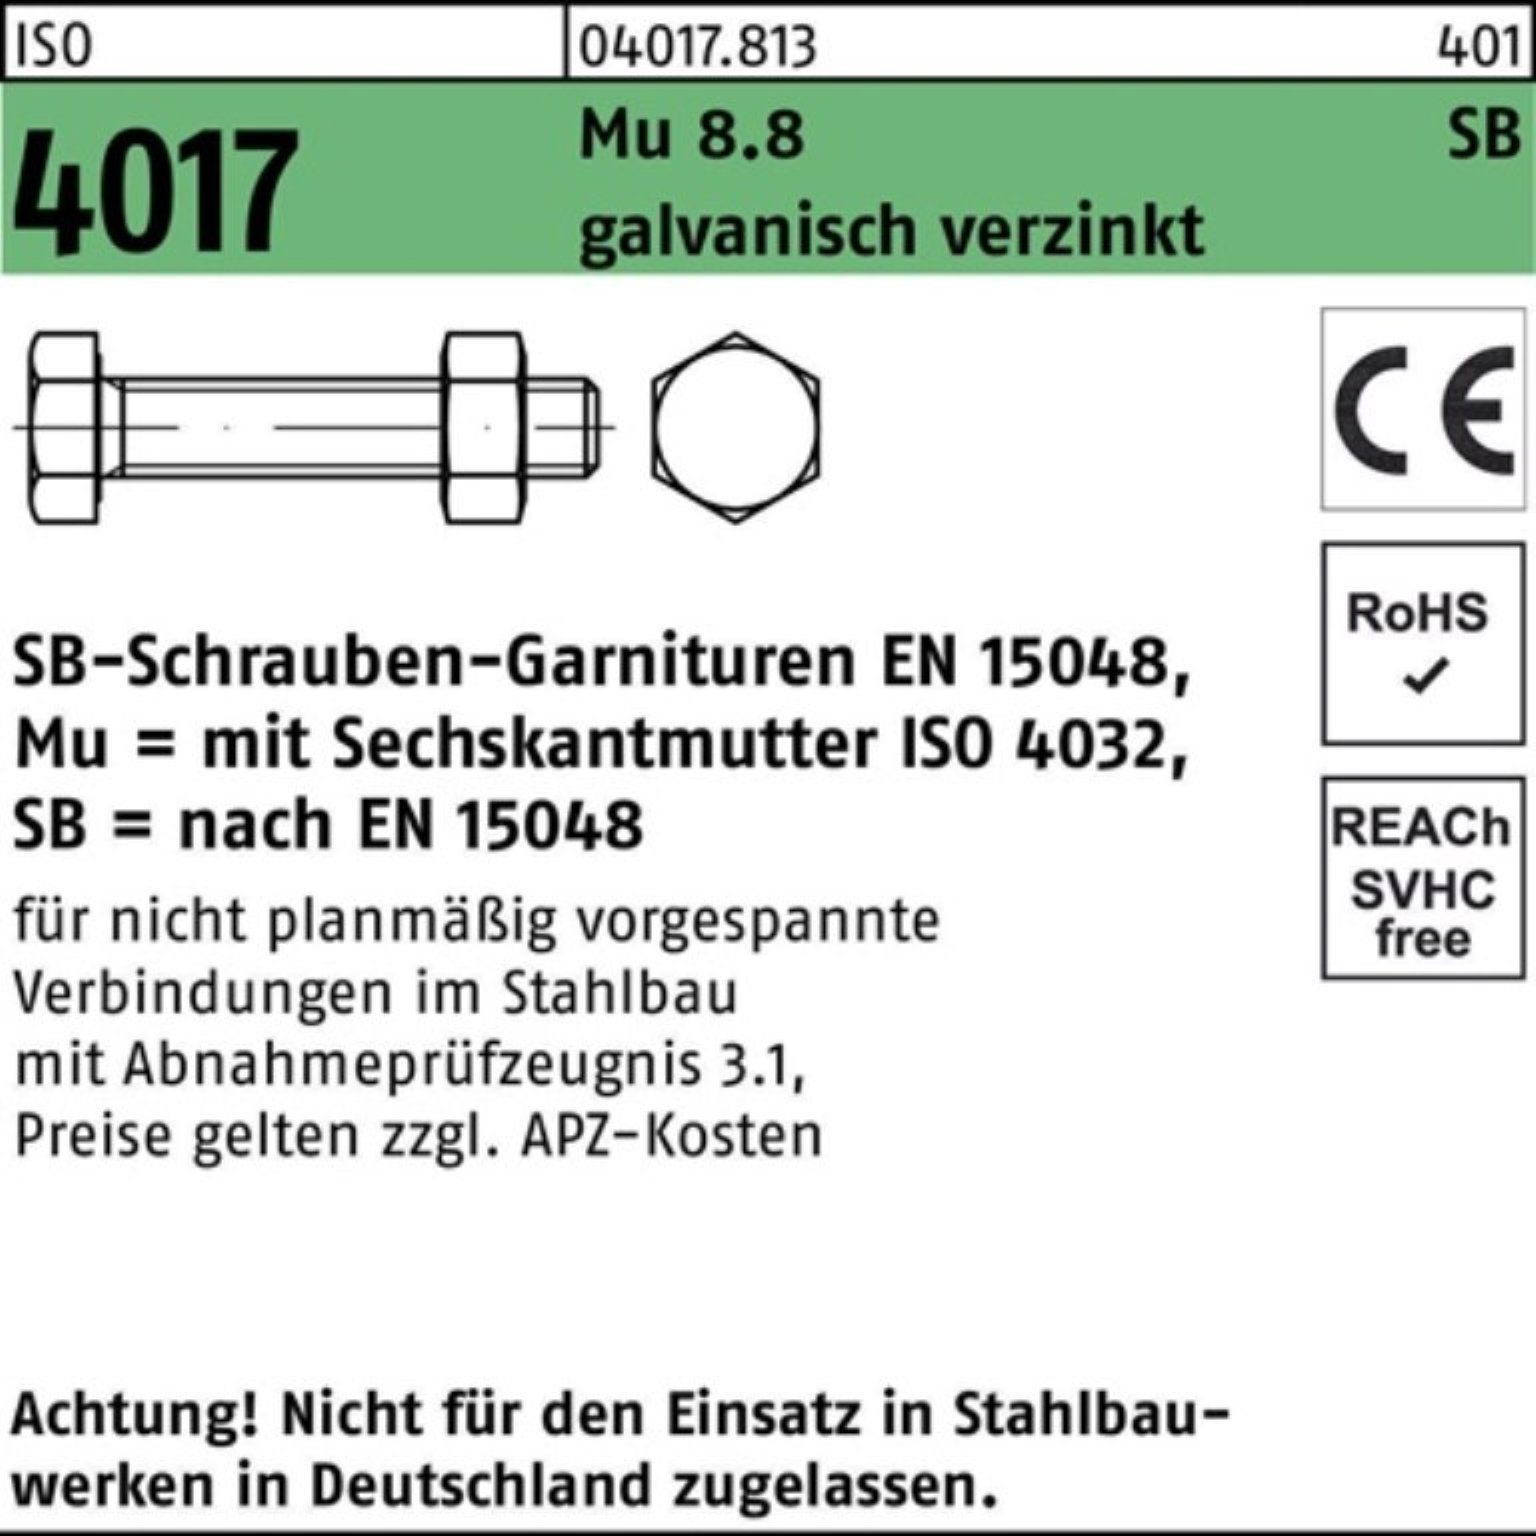 galv.verz. Bufab 100er Sechskantschraube VG 4017 Pack 8.8 M10x Sechskantschraube 100 ISO SB 50